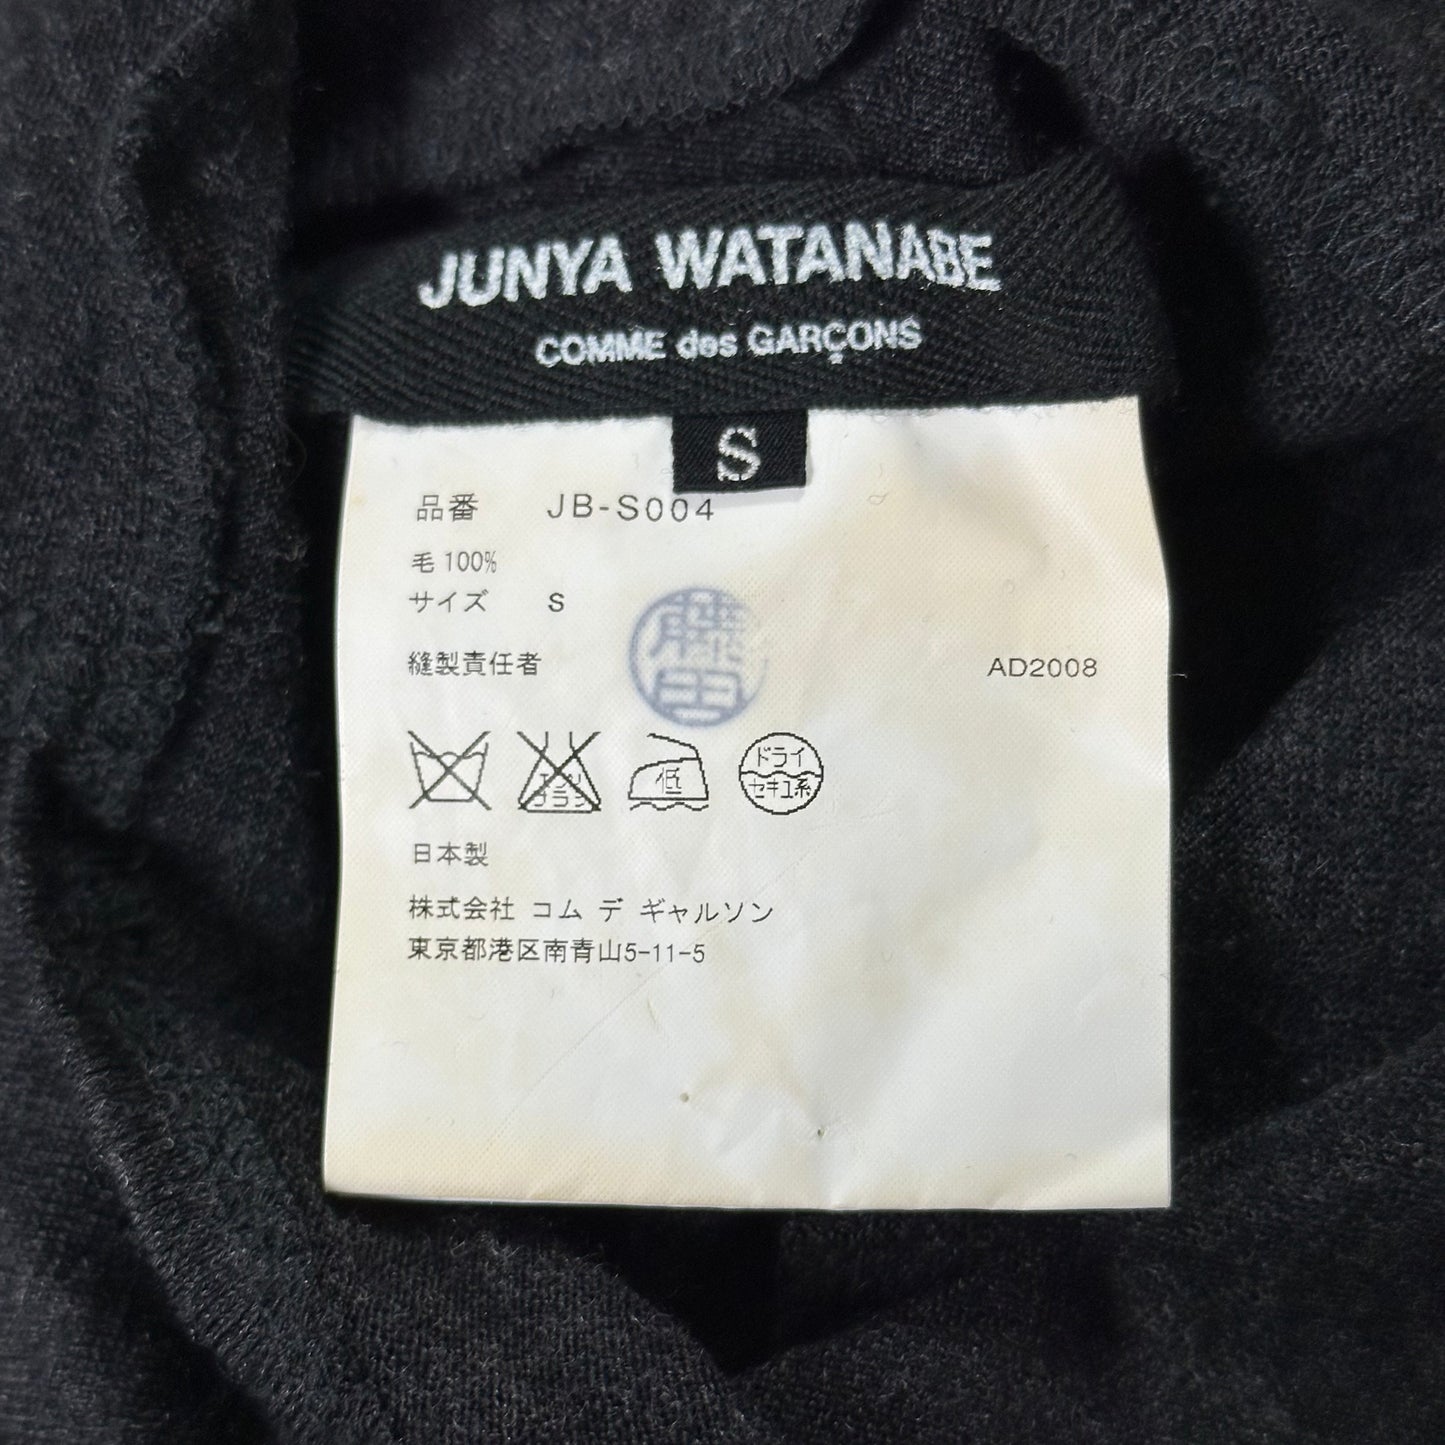 JUNYA WATANABE Fall Winter 2008 Two Way Asymmetric Maxi Skirt Tube Top Midi Dress